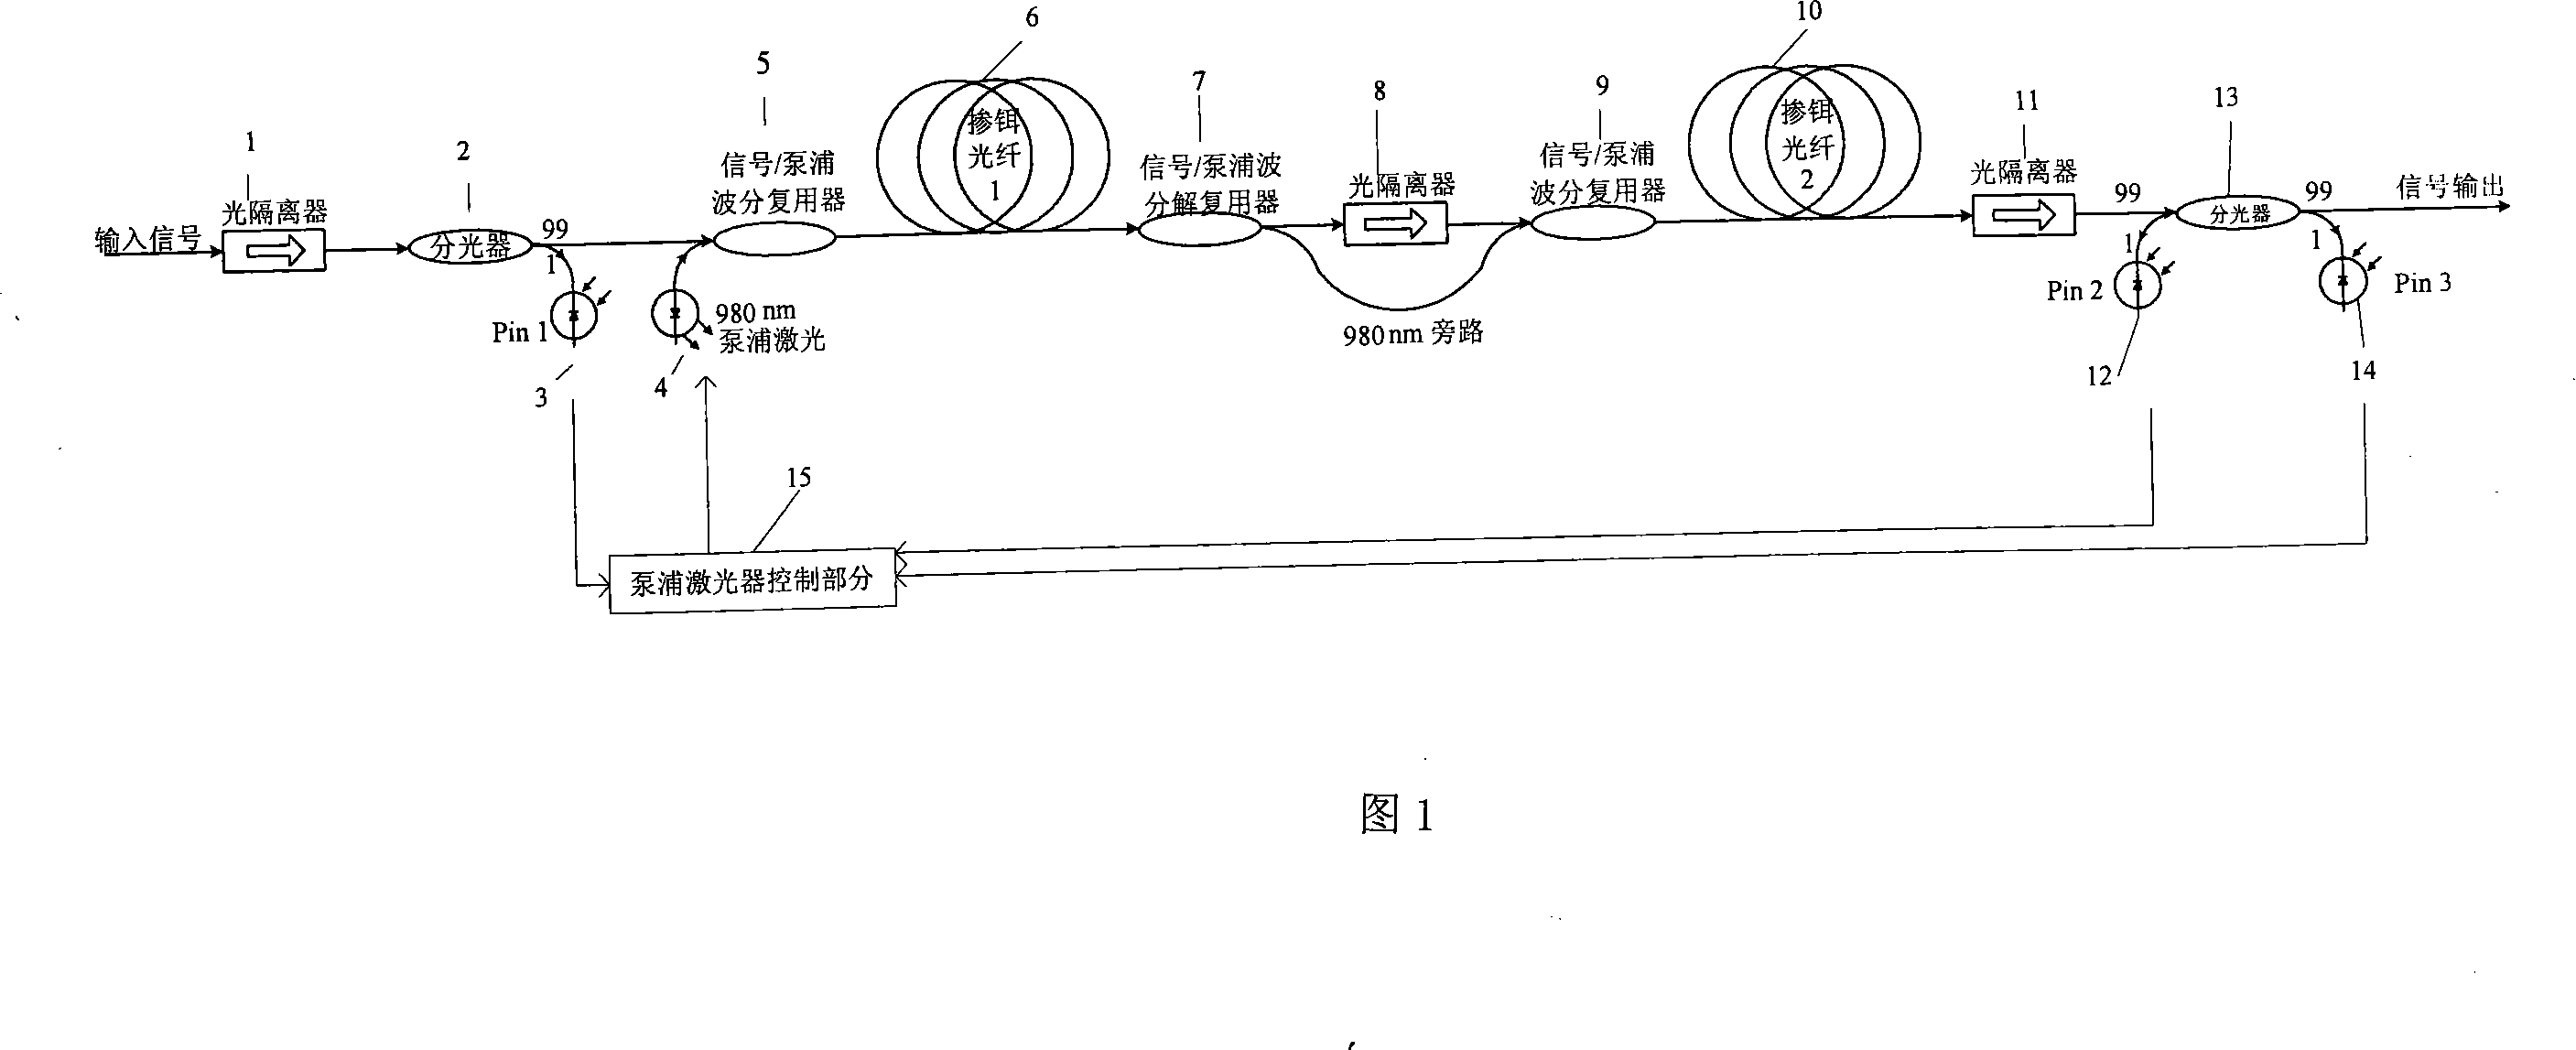 A gain controllable two-segment erbium-doped optical fiber amplifier